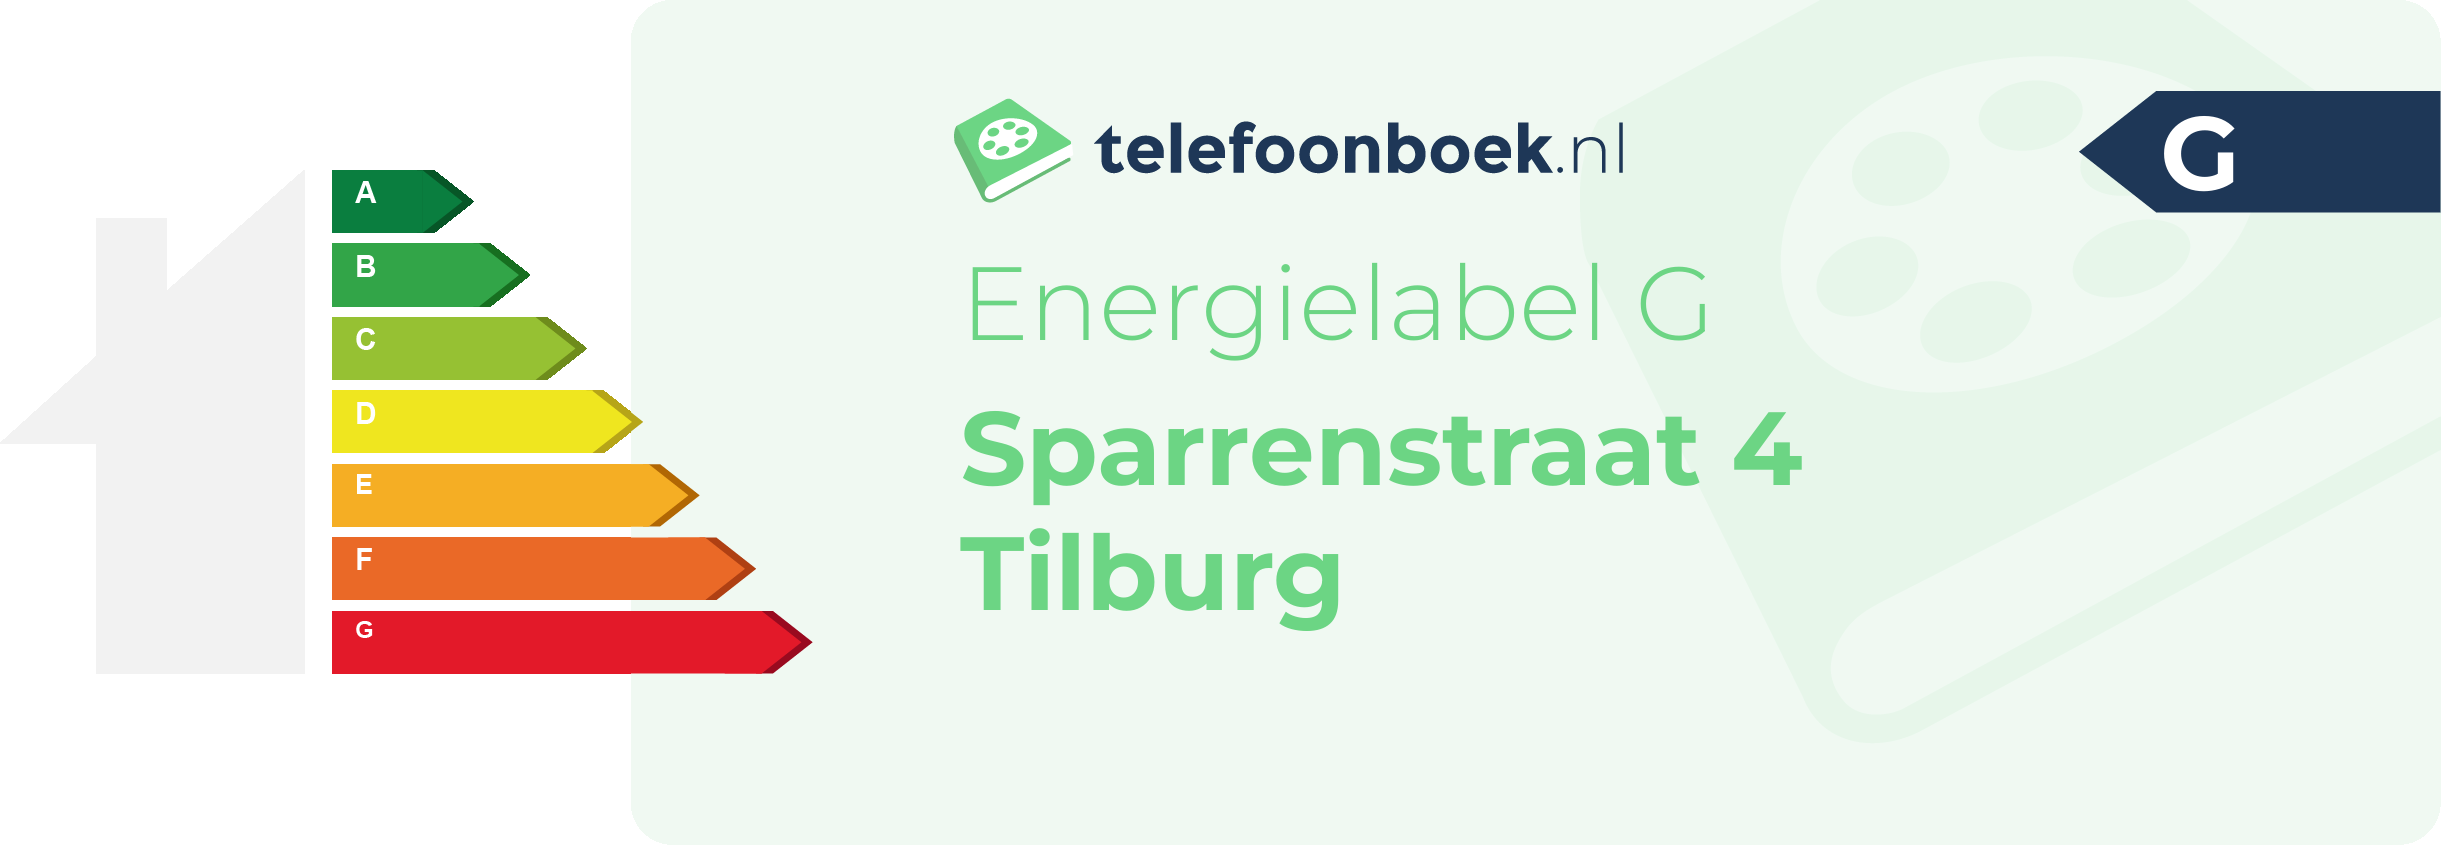 Energielabel Sparrenstraat 4 Tilburg